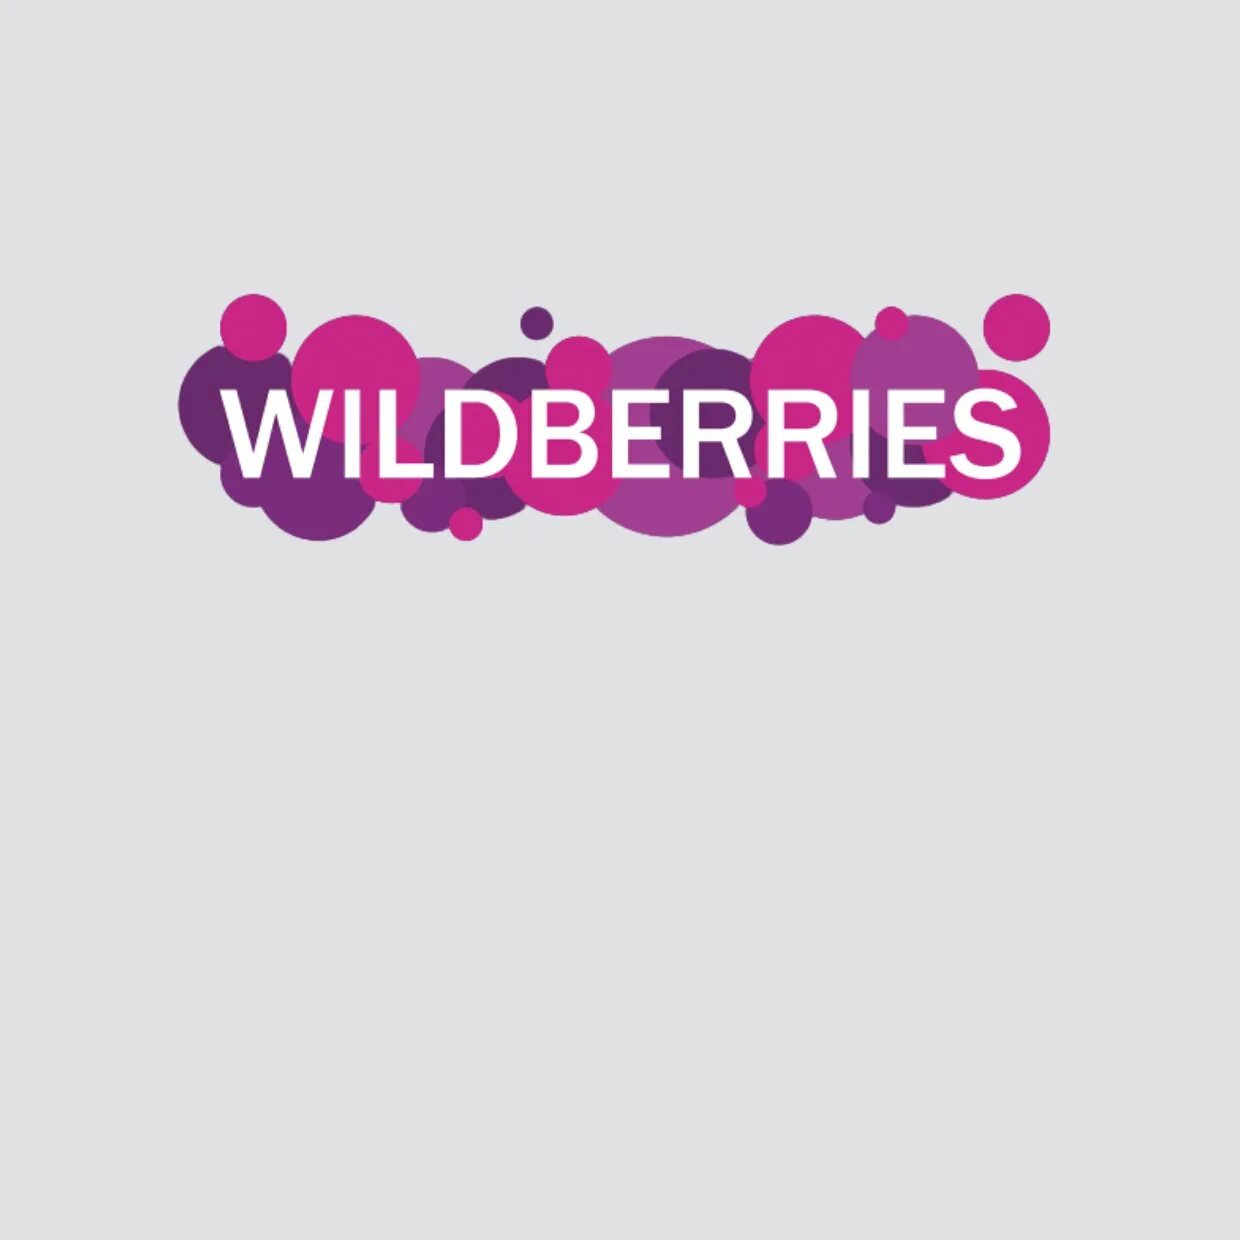 Wildberries лого. Надпись Wildberries. Wildberries обучение. Логотип Wildberries на прозрачном фоне. Флаеры вайлдберриз